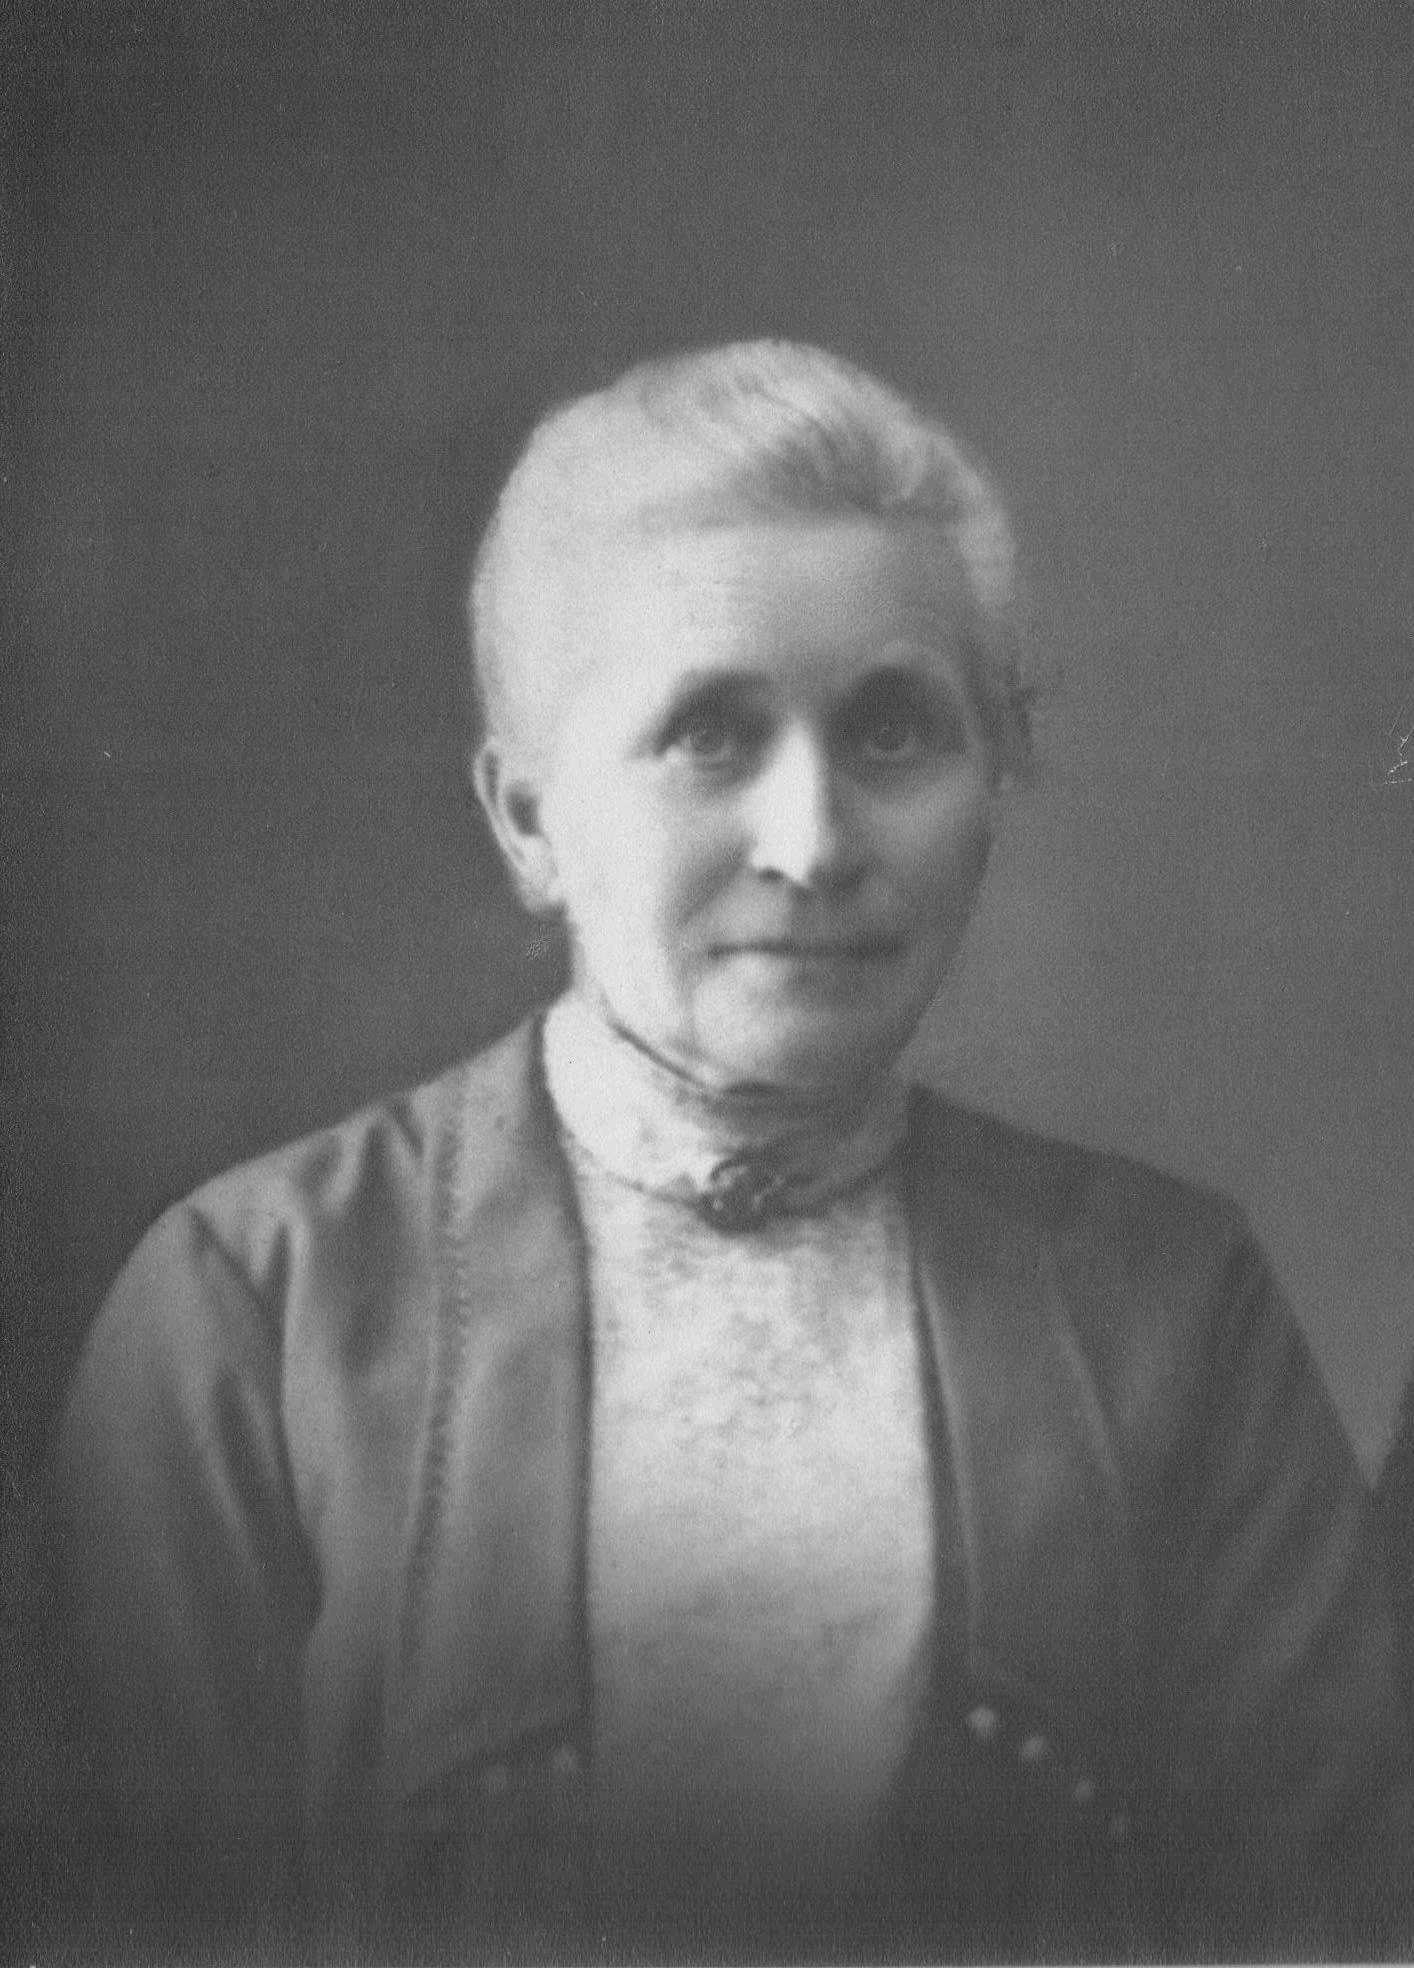 11. Side 4 af 11 Marie Christine Juliane Hansen [Frandsen] blev født den Sep. 10 1872 i Stoense, Langeland, Region Syddanmark, Denmark og døde den Jan. 23 1946.